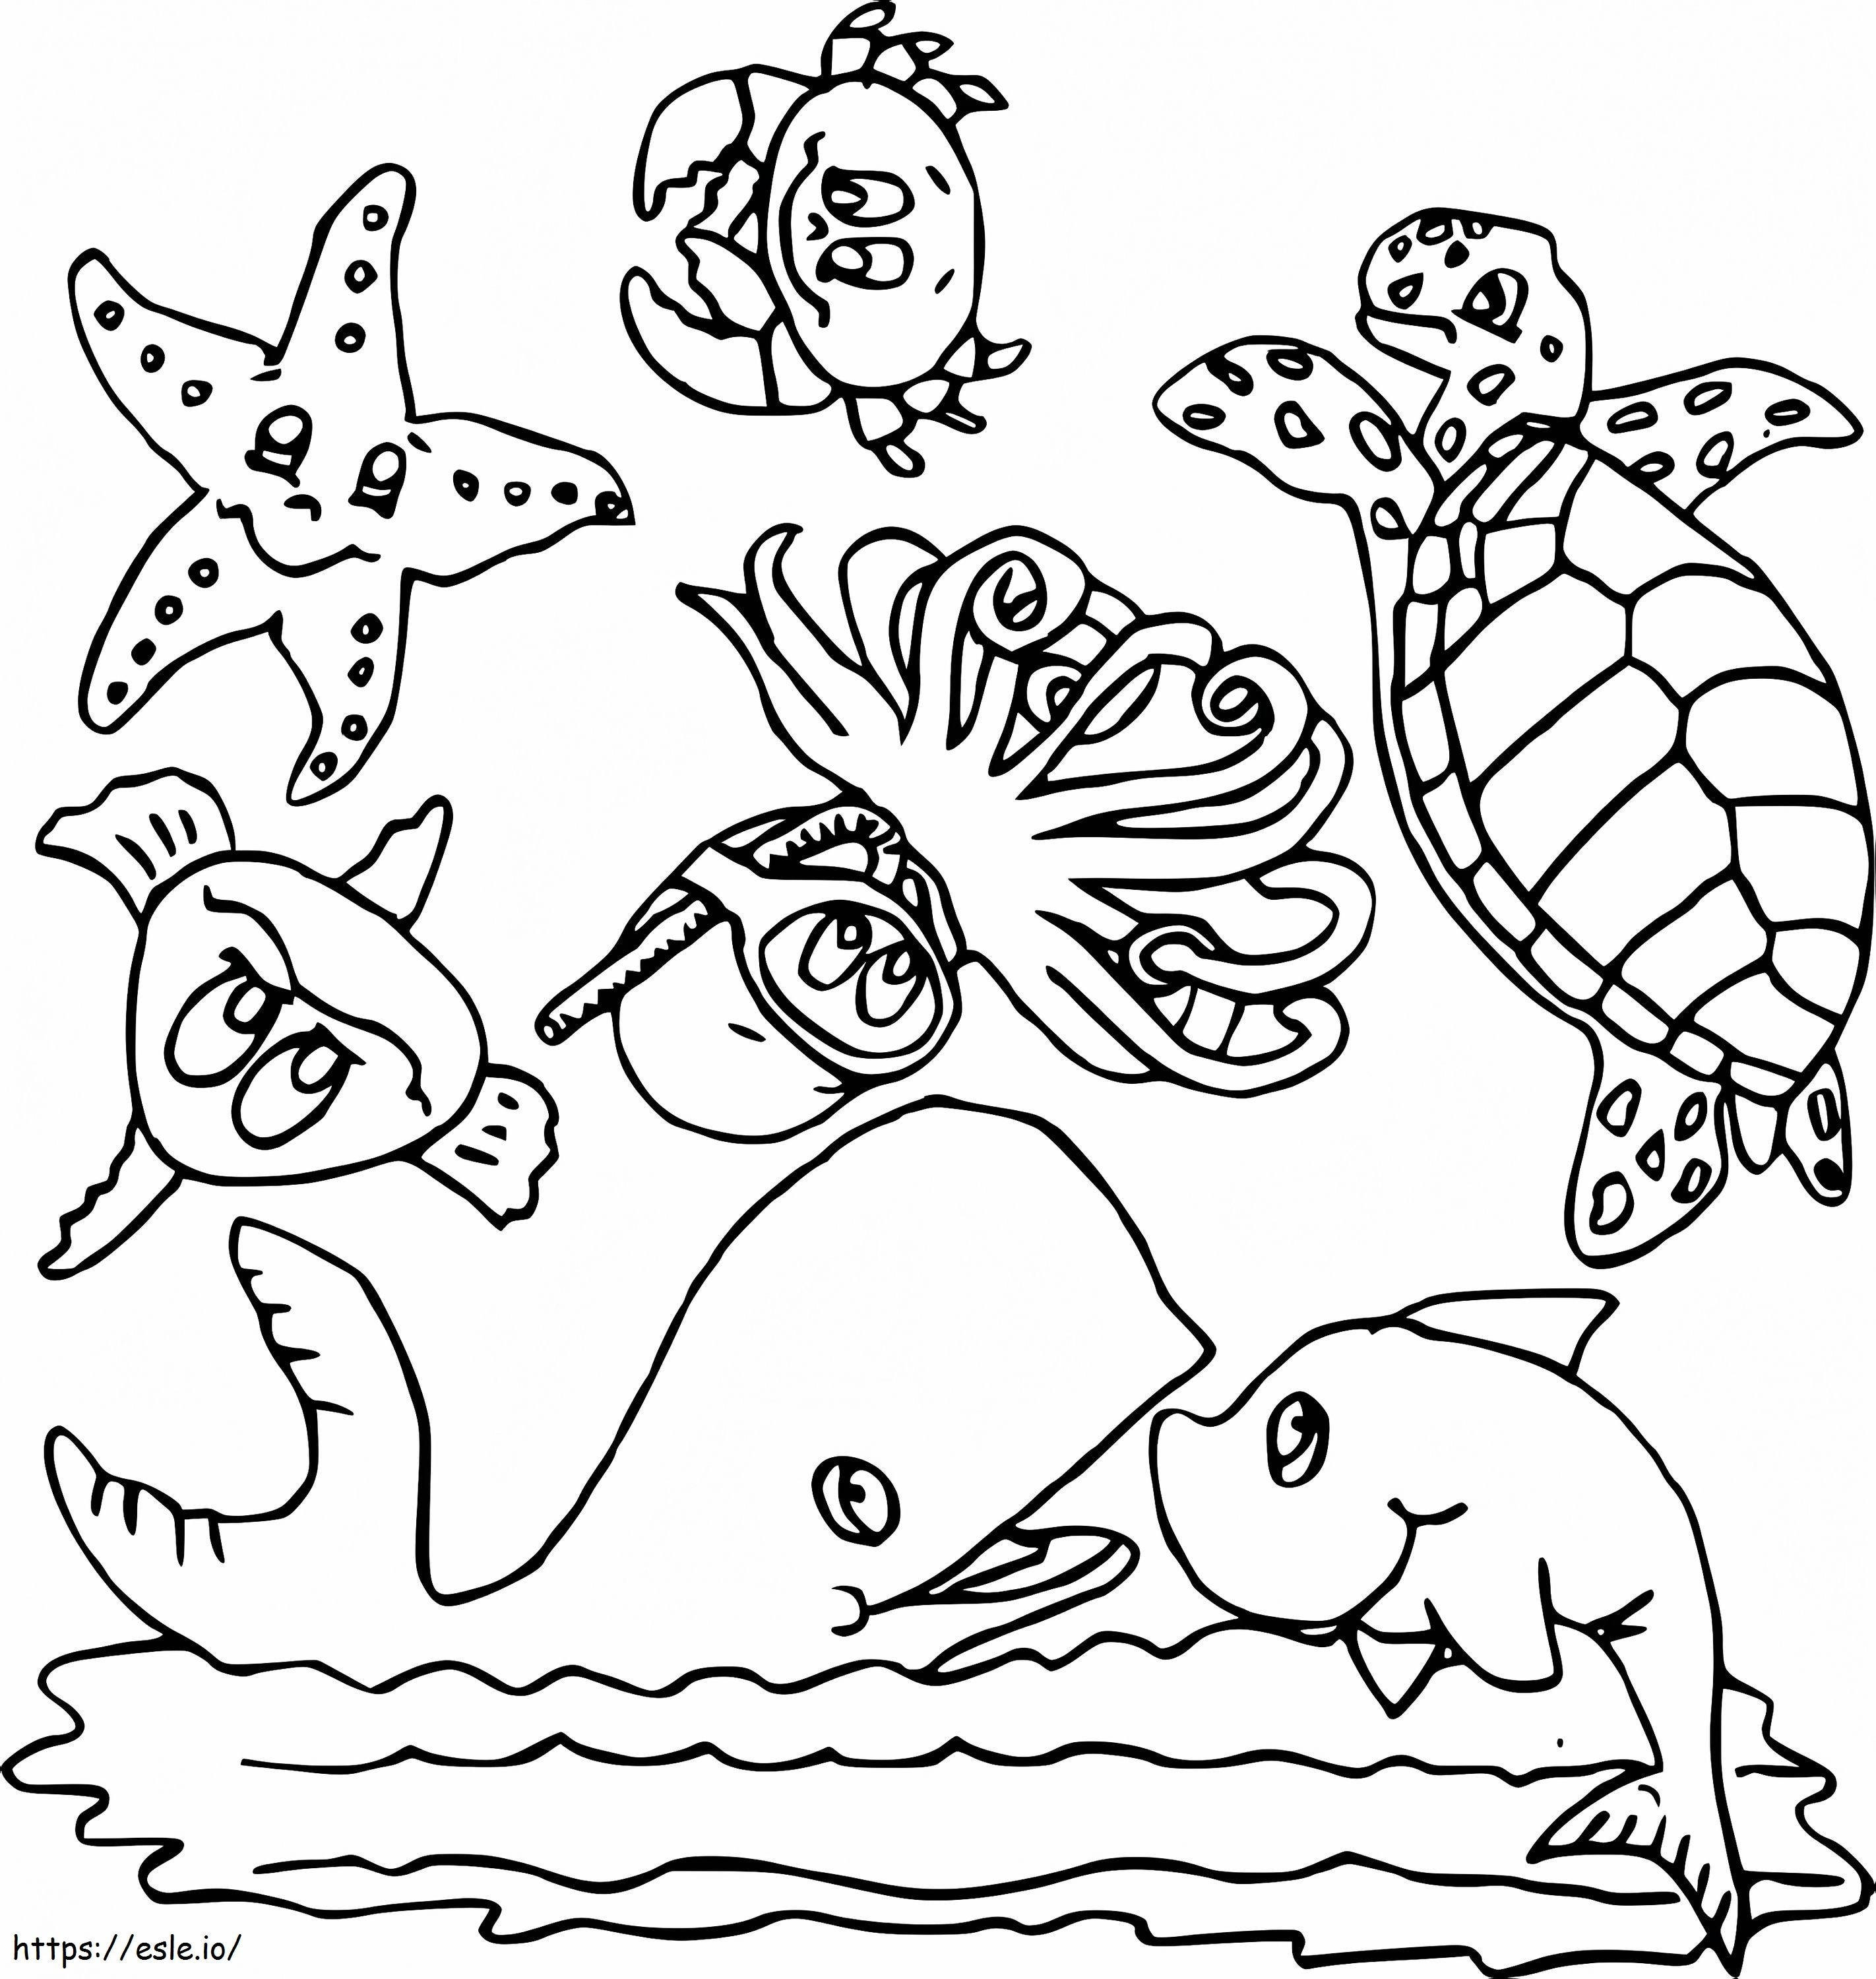 Ocean Life Free Printable coloring page